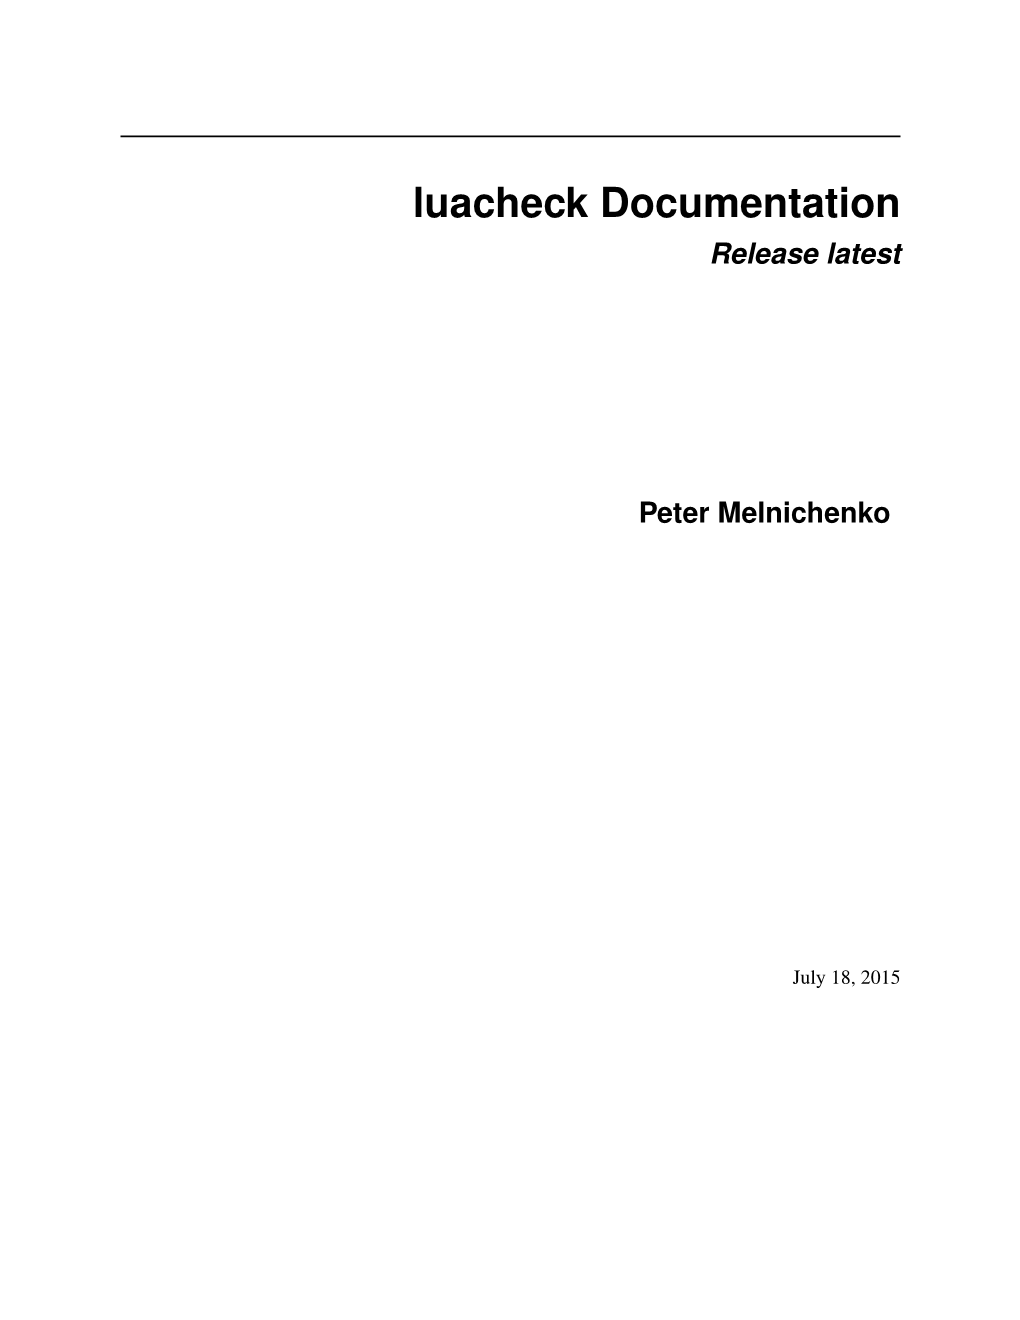 Luacheck Documentation Release Latest